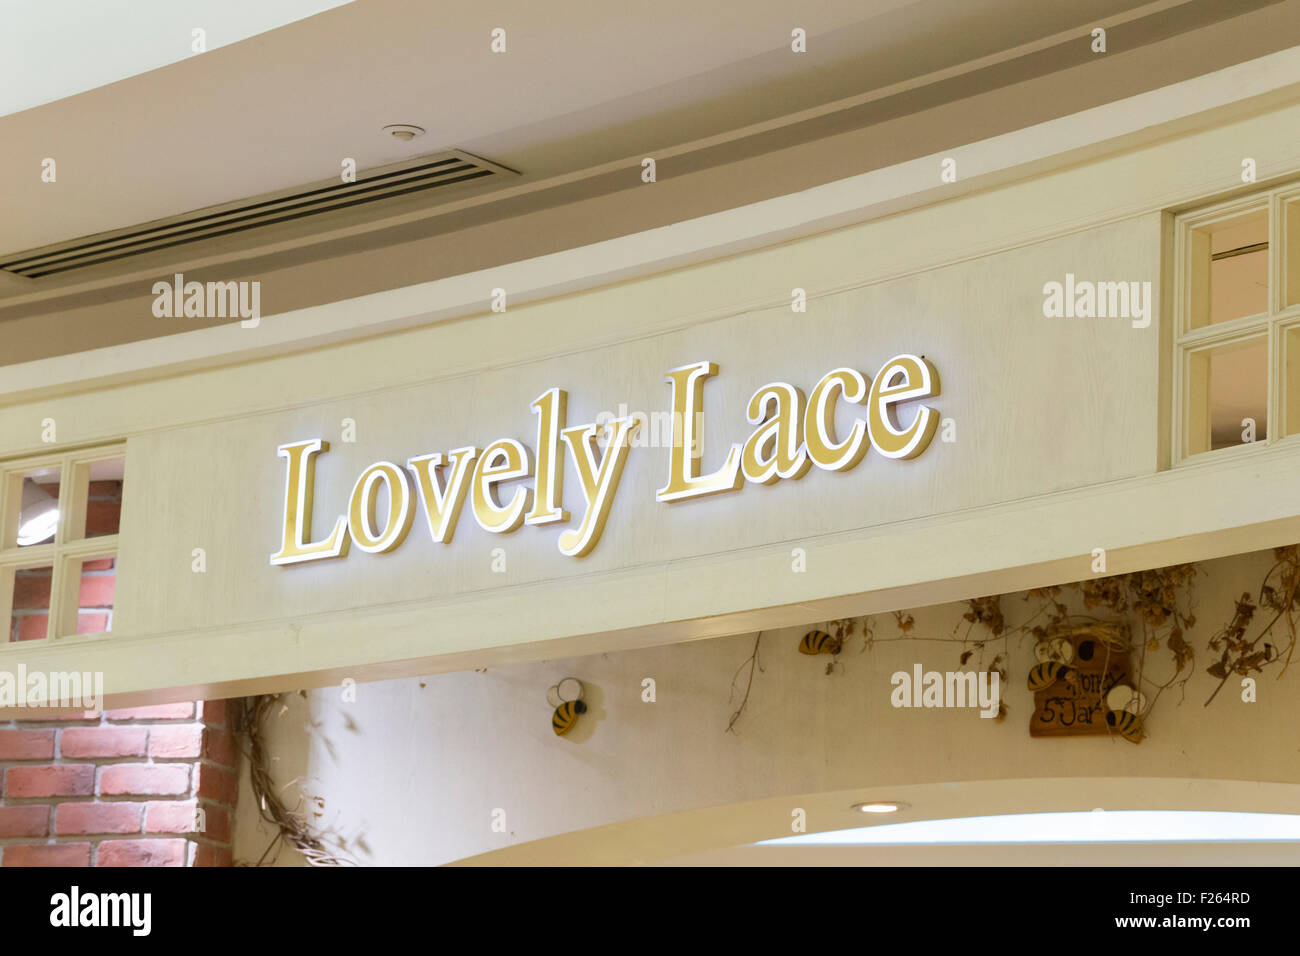 Lovely lace logo Stock Photo